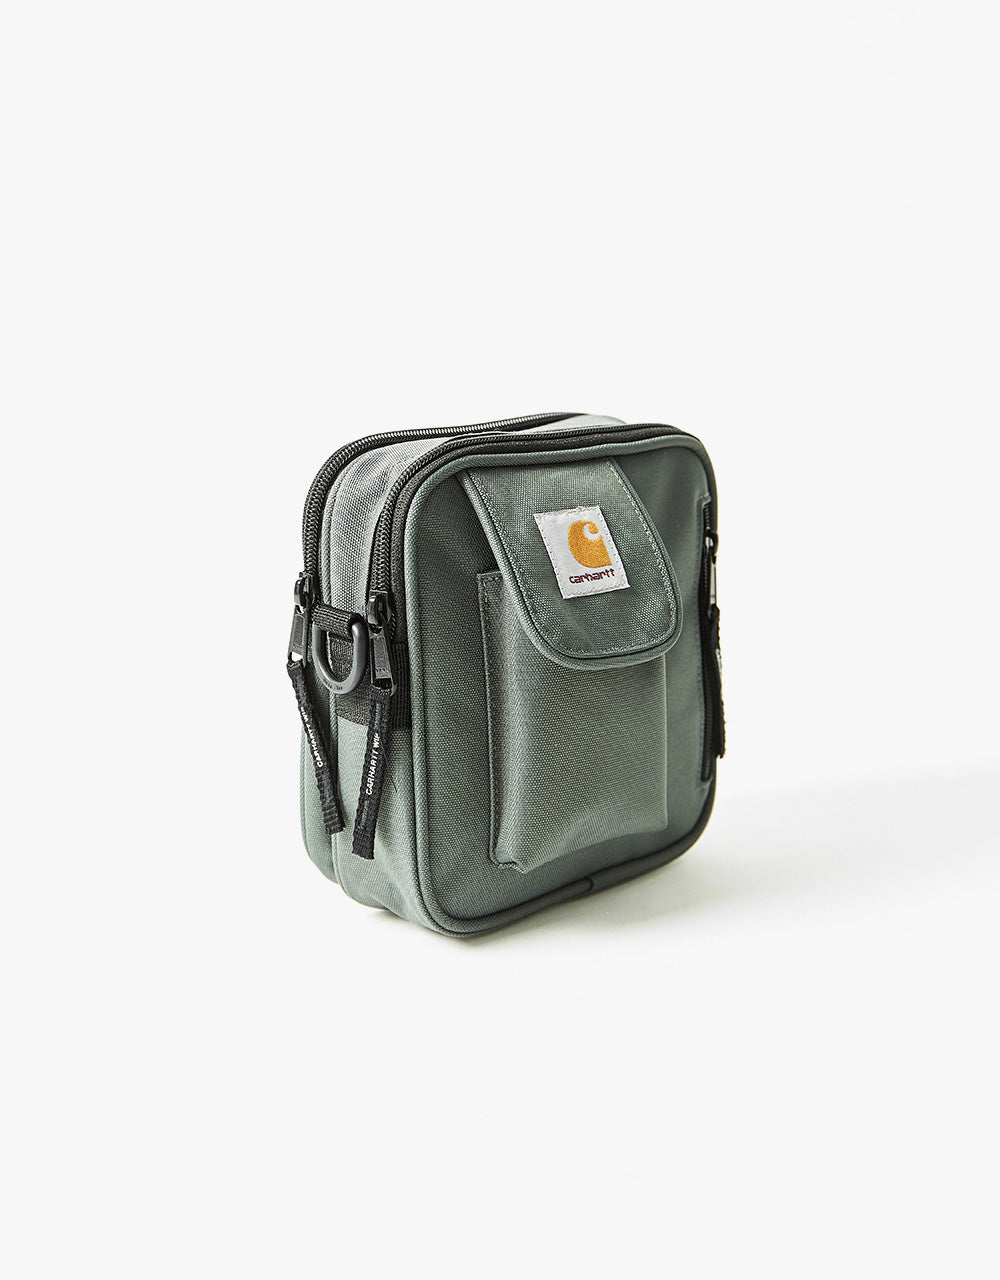 Carhartt WIP Essentials Cross Body Bag - Hemlock Green